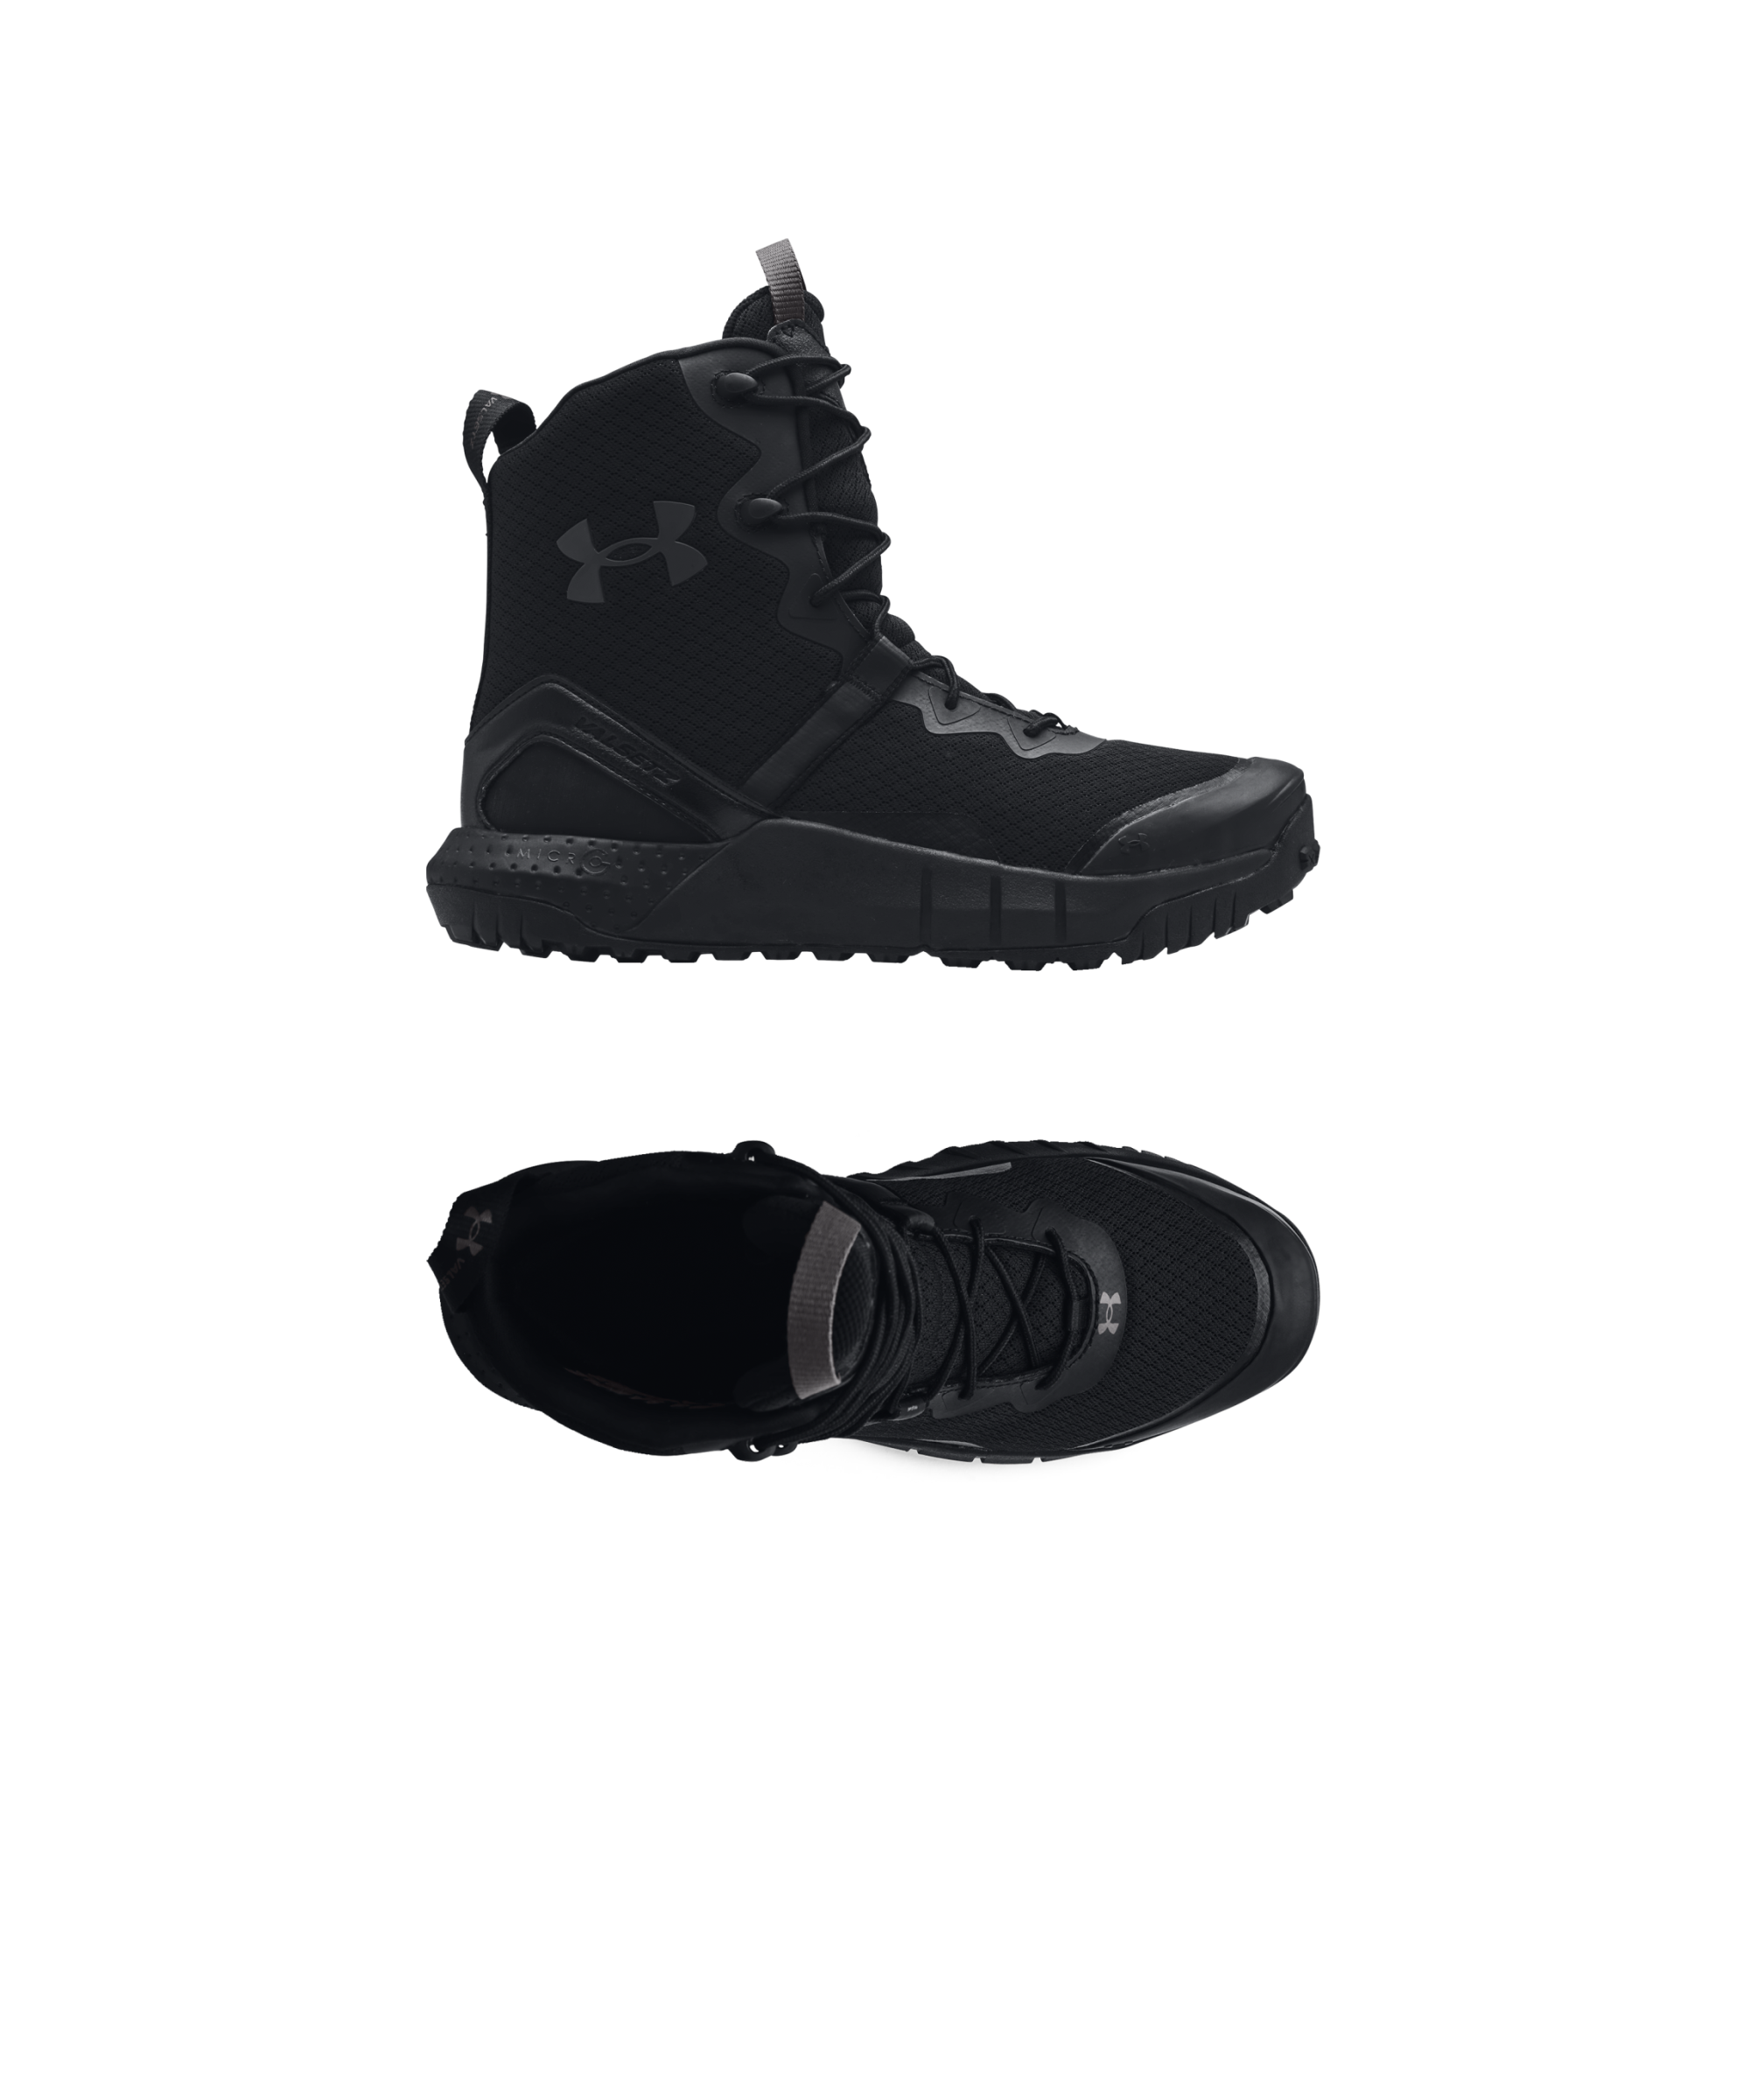 Under Armour Micro G Valsetz Boots - Black